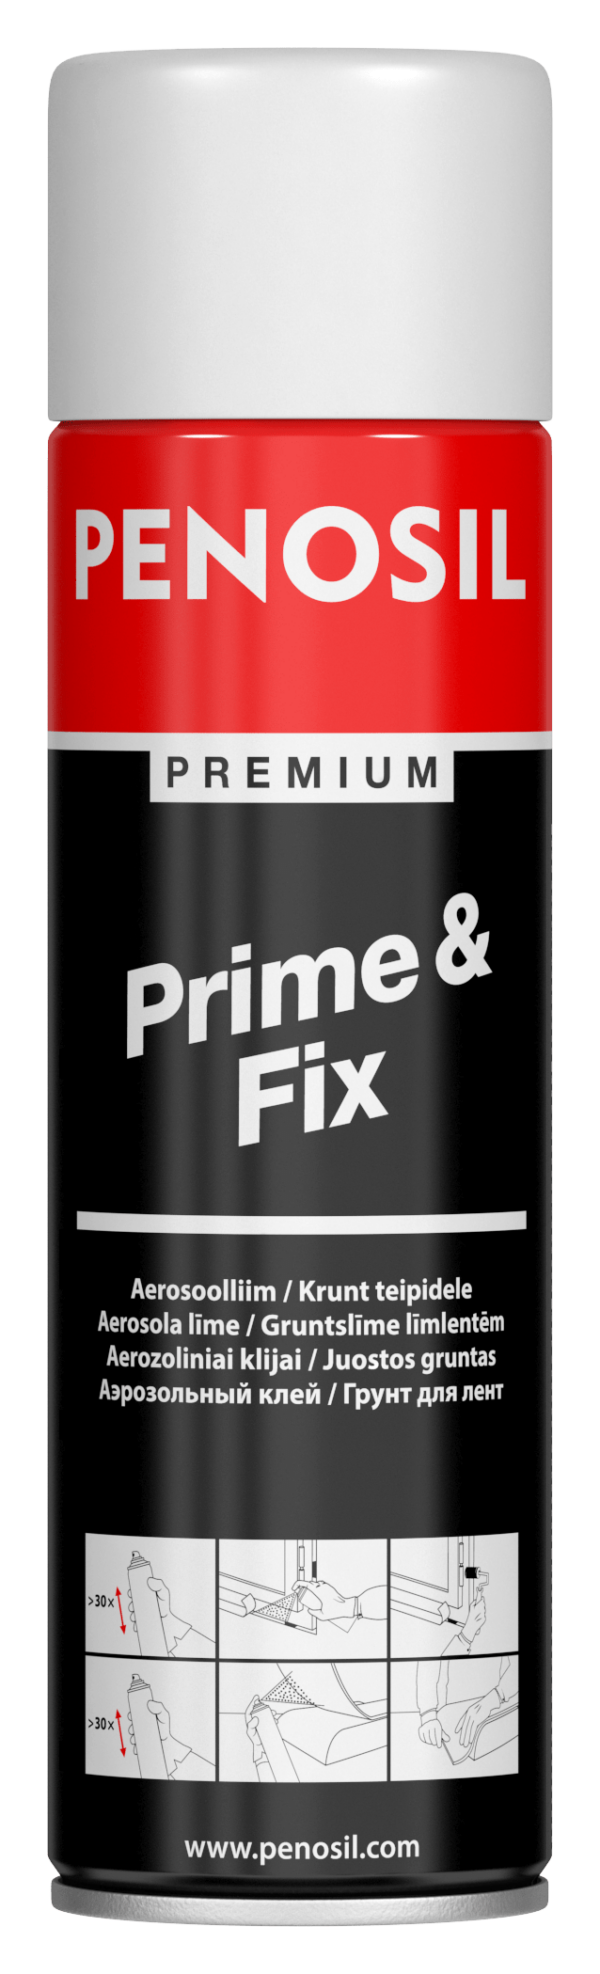 Penosil Prime& Fix ir universāla aerosola līme